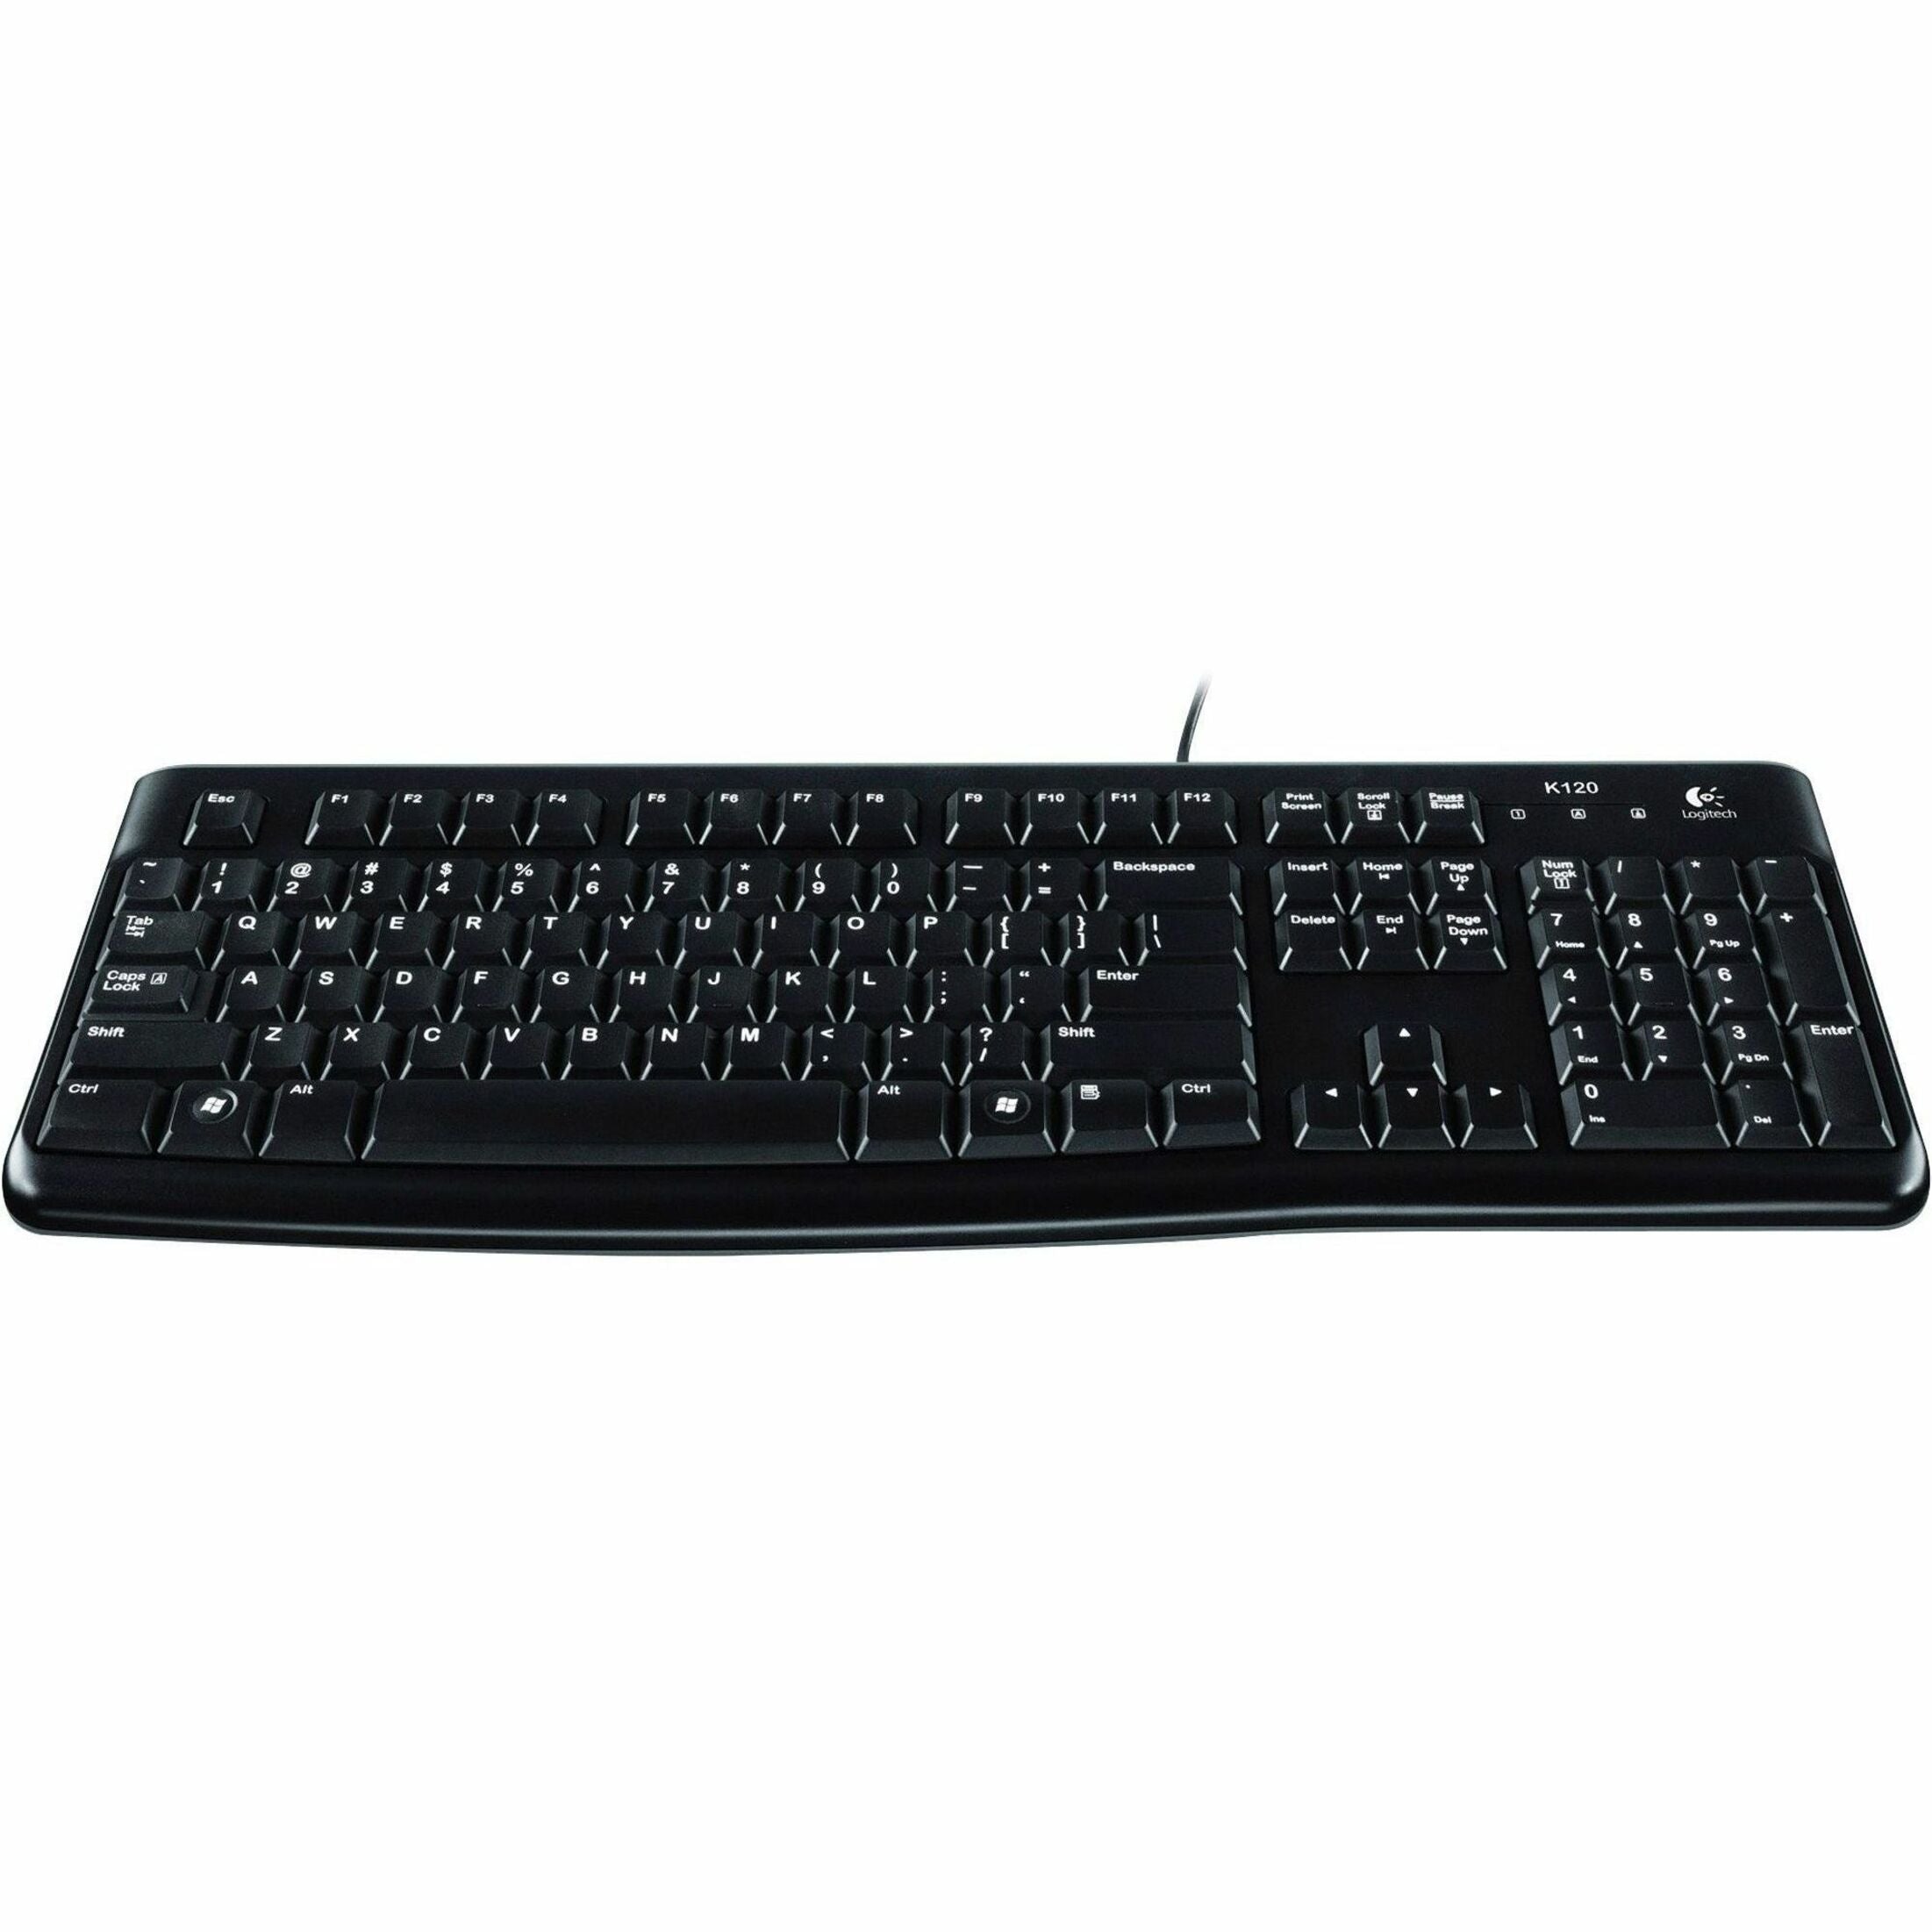 Logitech 920-002478 K120 Plug-and-Play USB Keyboard, Low-profile Keys, Spill Resistant, Quiet Keys, Adjustable Tilt, Full-size Keyboard, Numeric Keypad